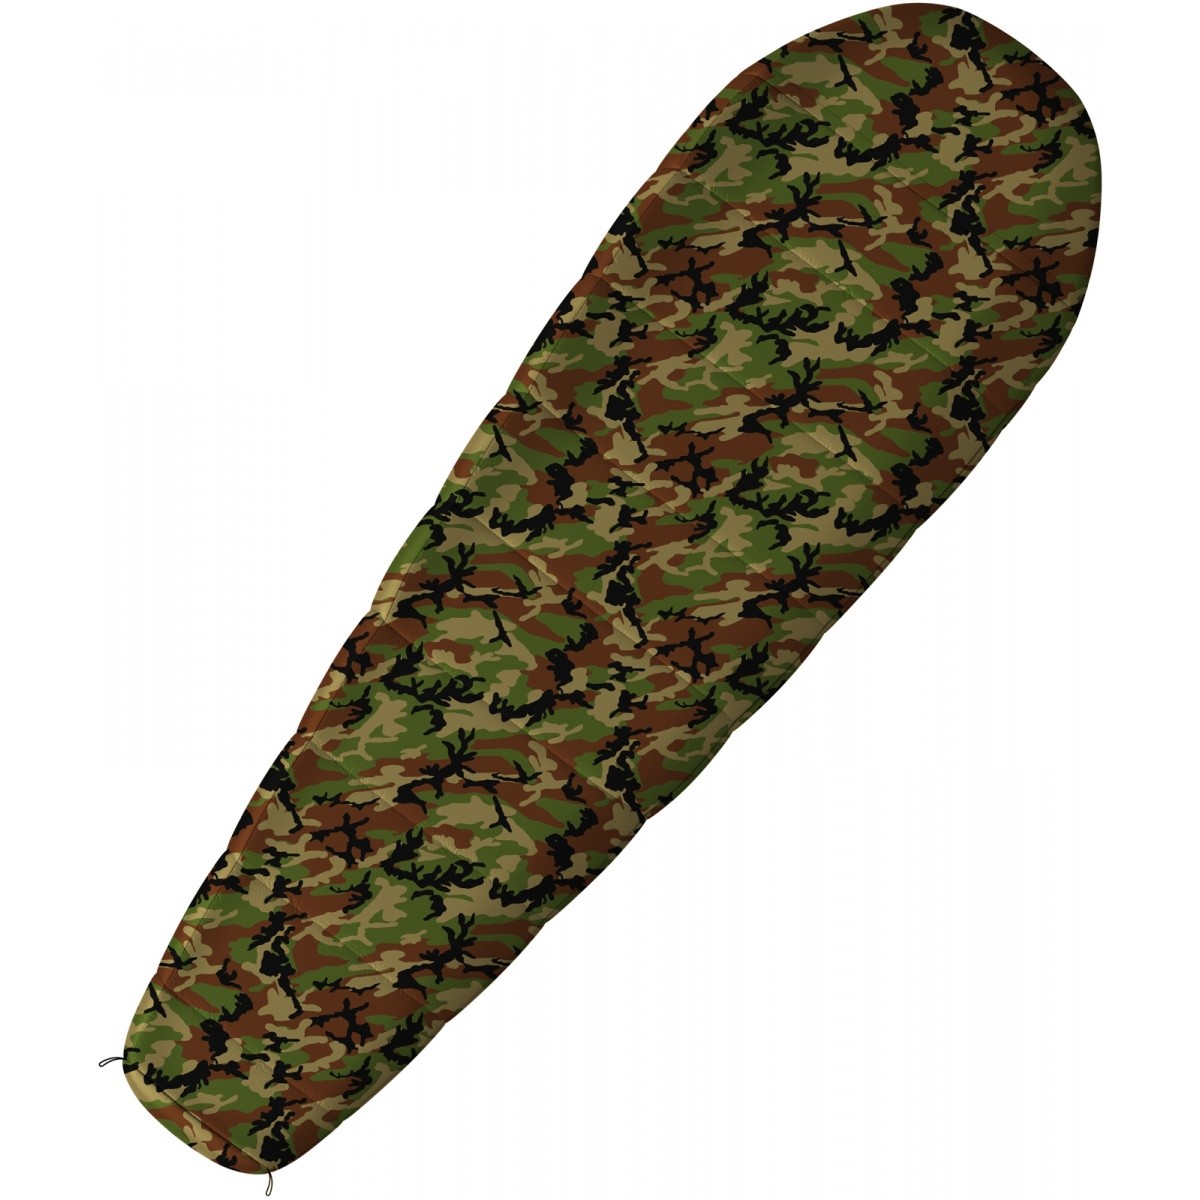 Спален чувал Army Camouflage -17 HUSKY - изглед 4